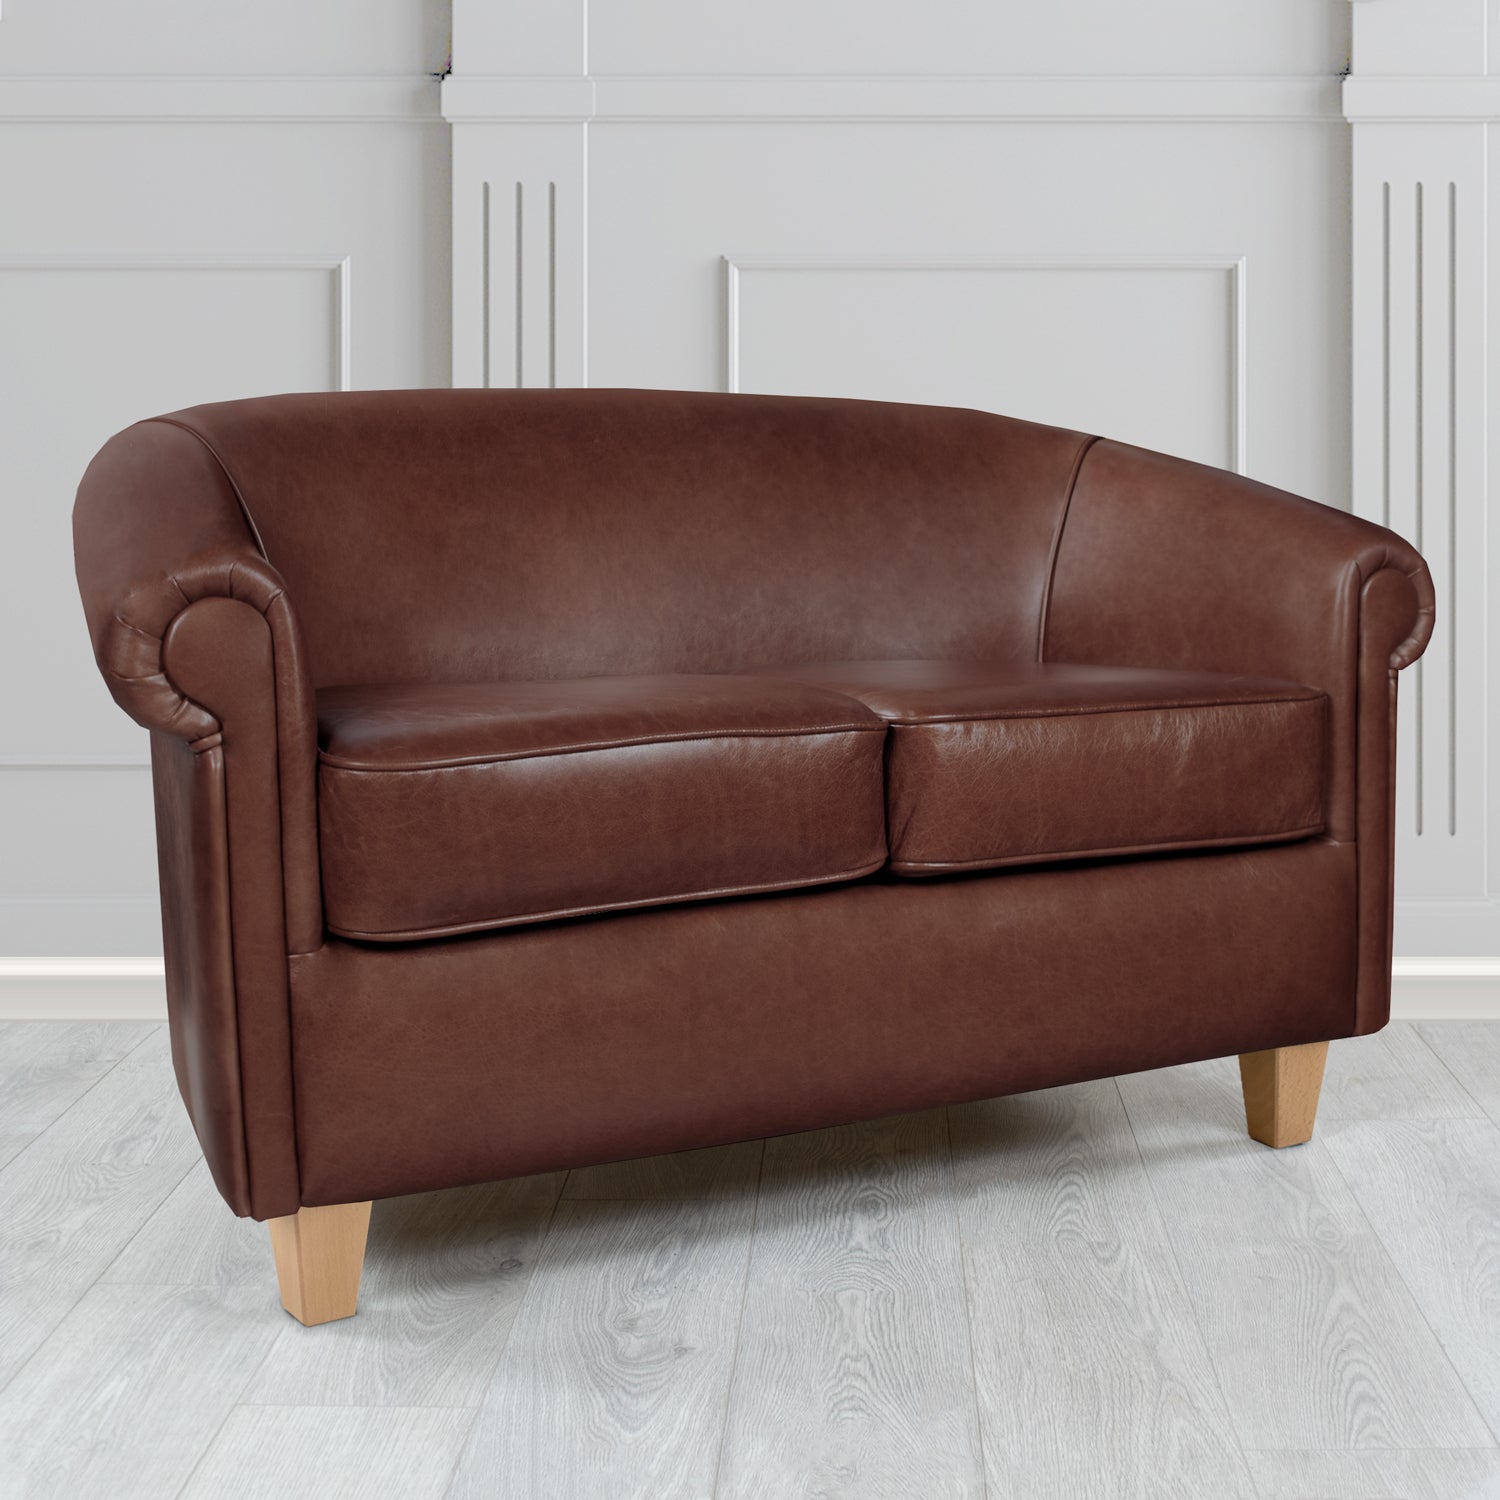 Siena 2 Seater Tub Sofa in Crib 5 Old English Dark Brown Genuine Leather - The Tub Chair Shop